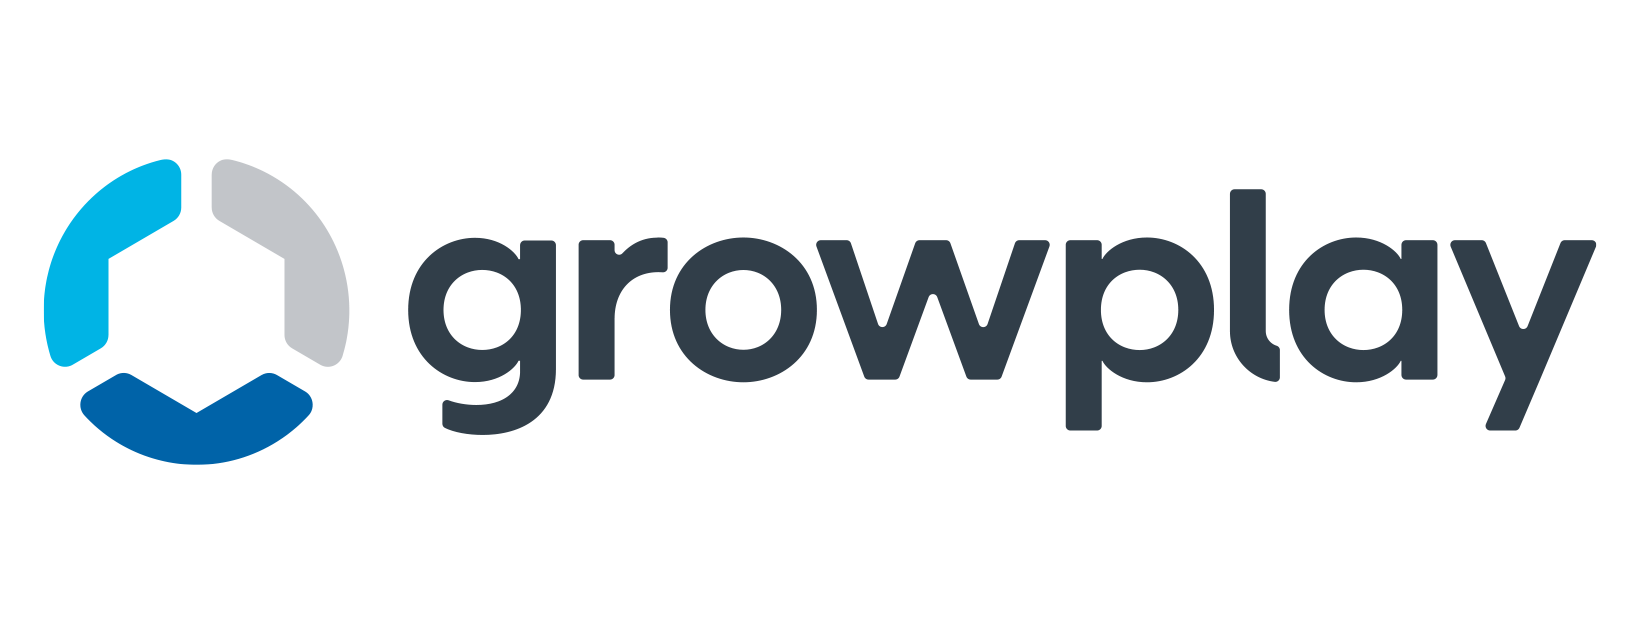 Growplay USA logo